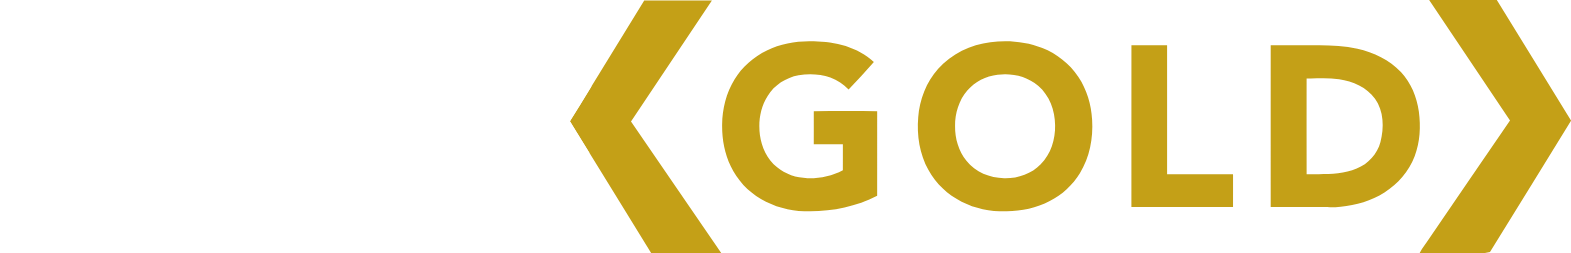 Tanzanian Gold Corporation Logo groß für dunkle Hintergründe (transparentes PNG)